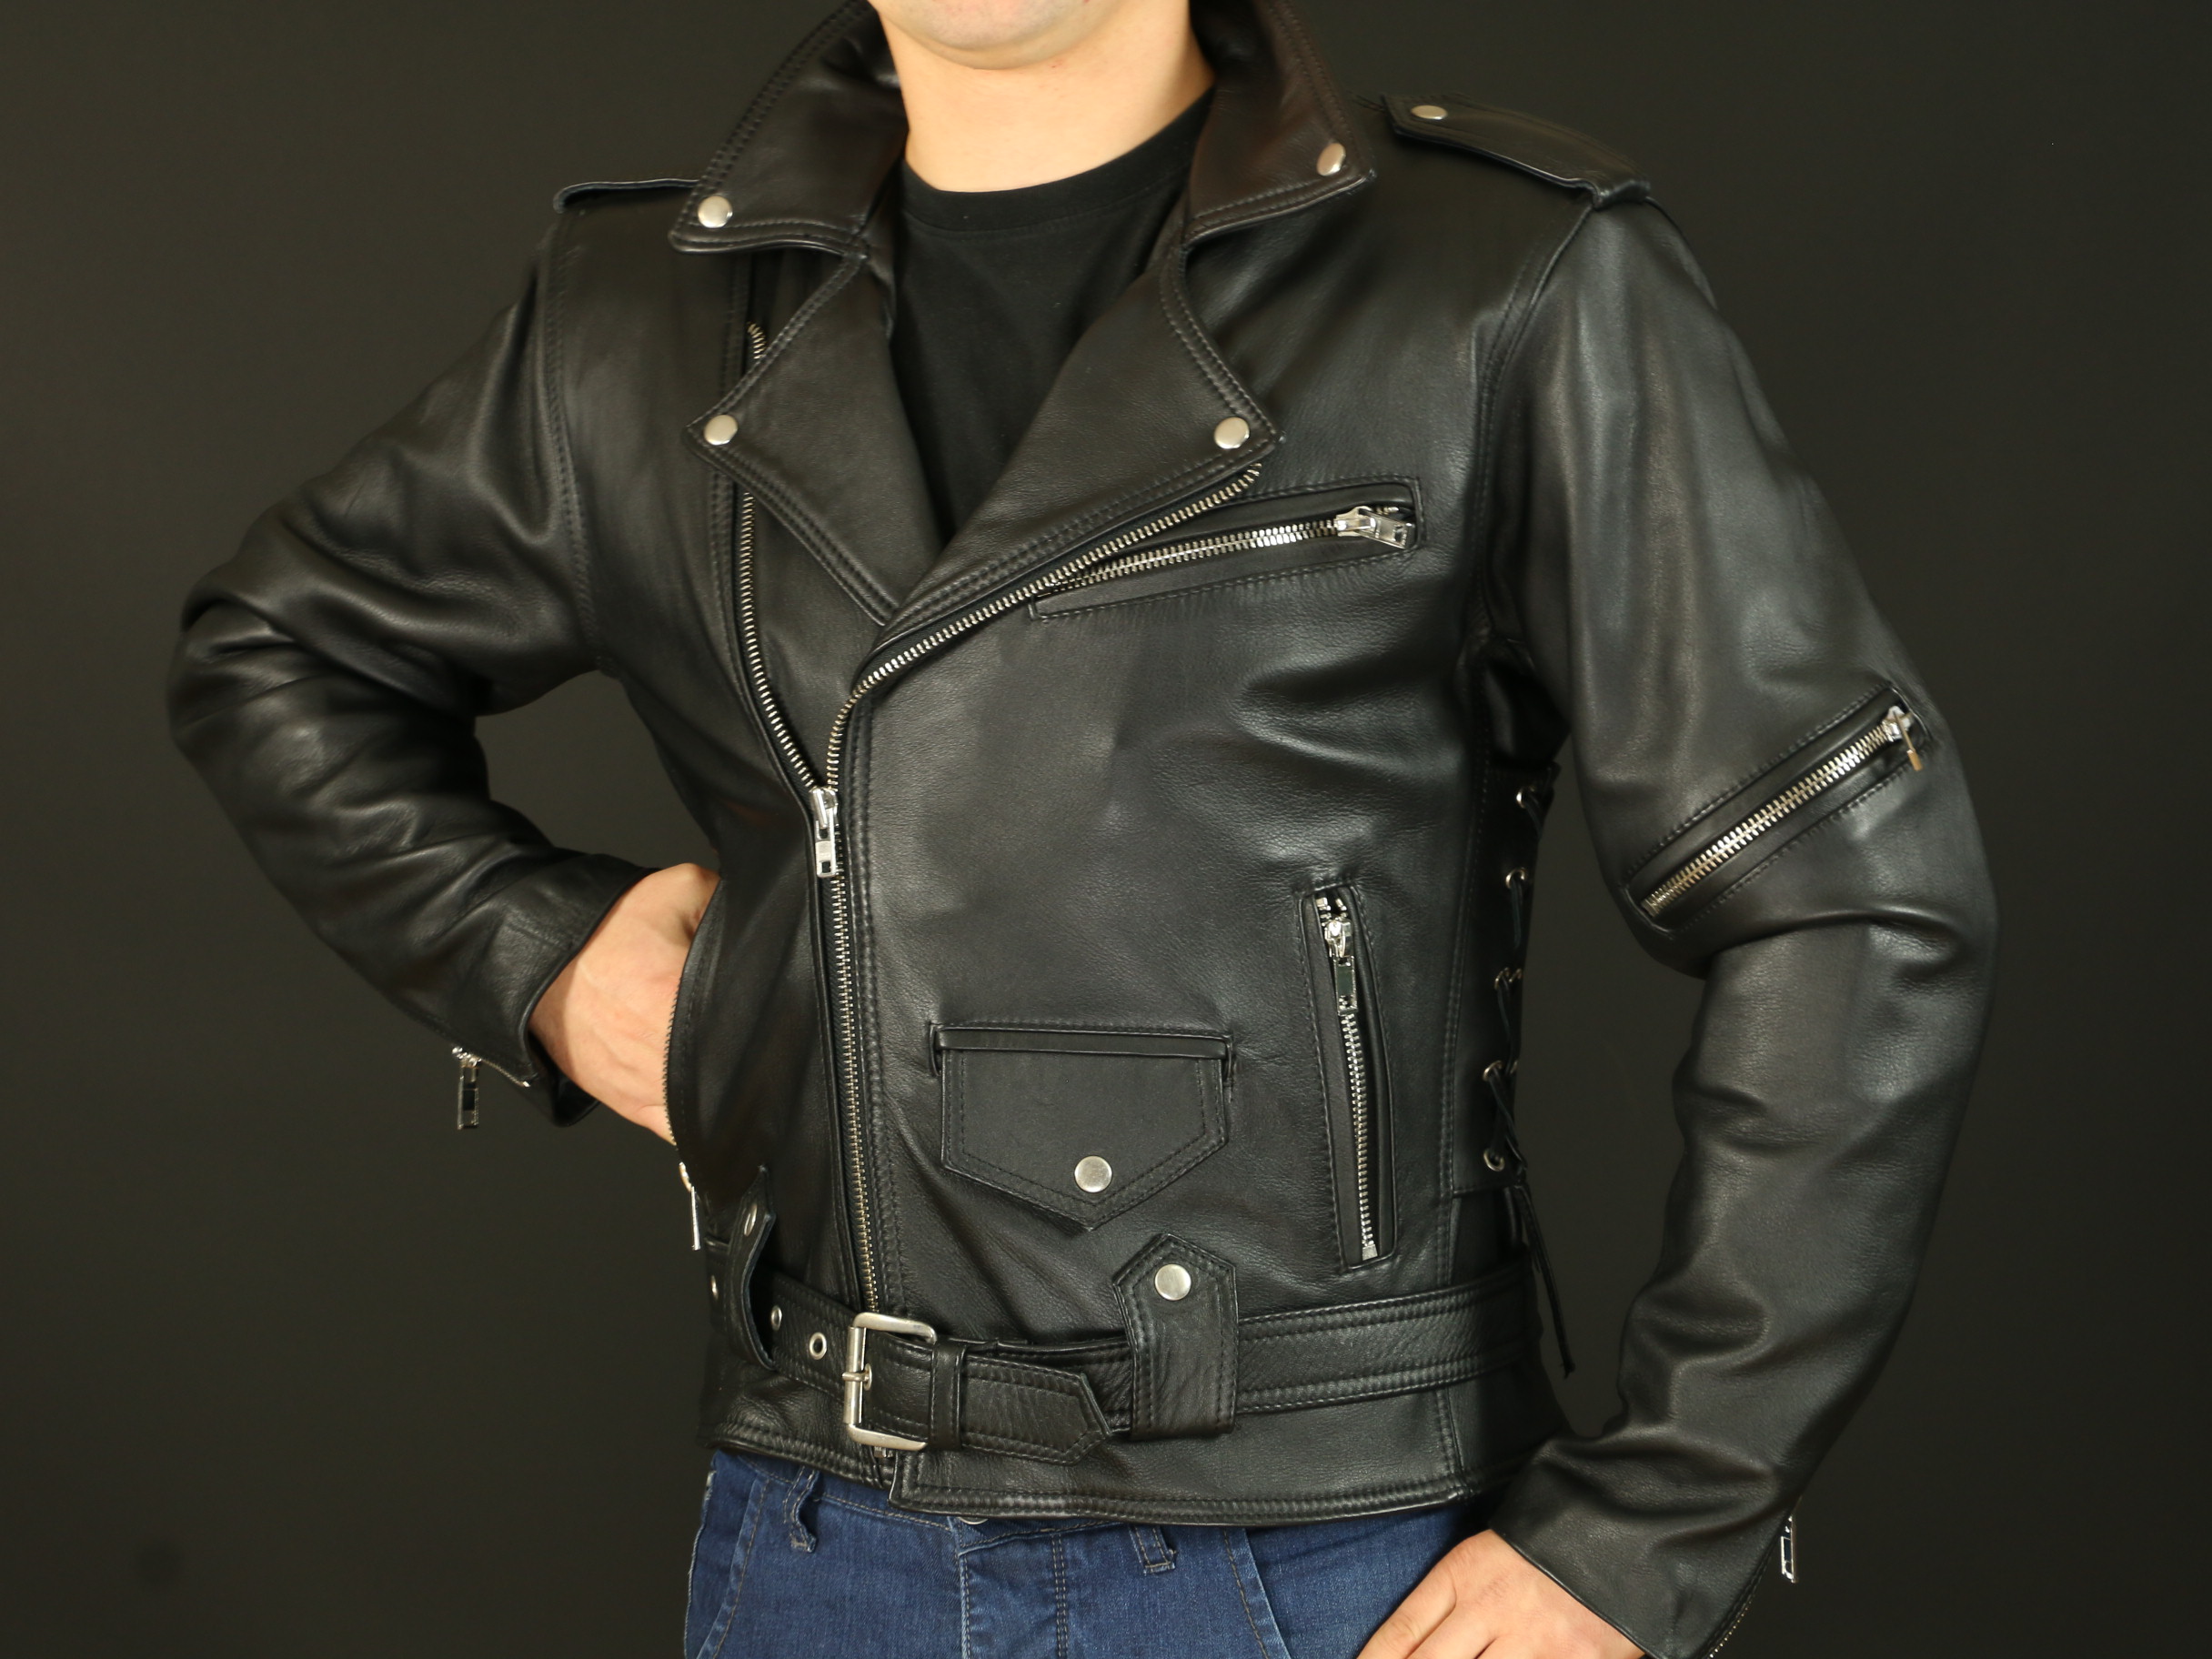 Motorbike Leather for Men